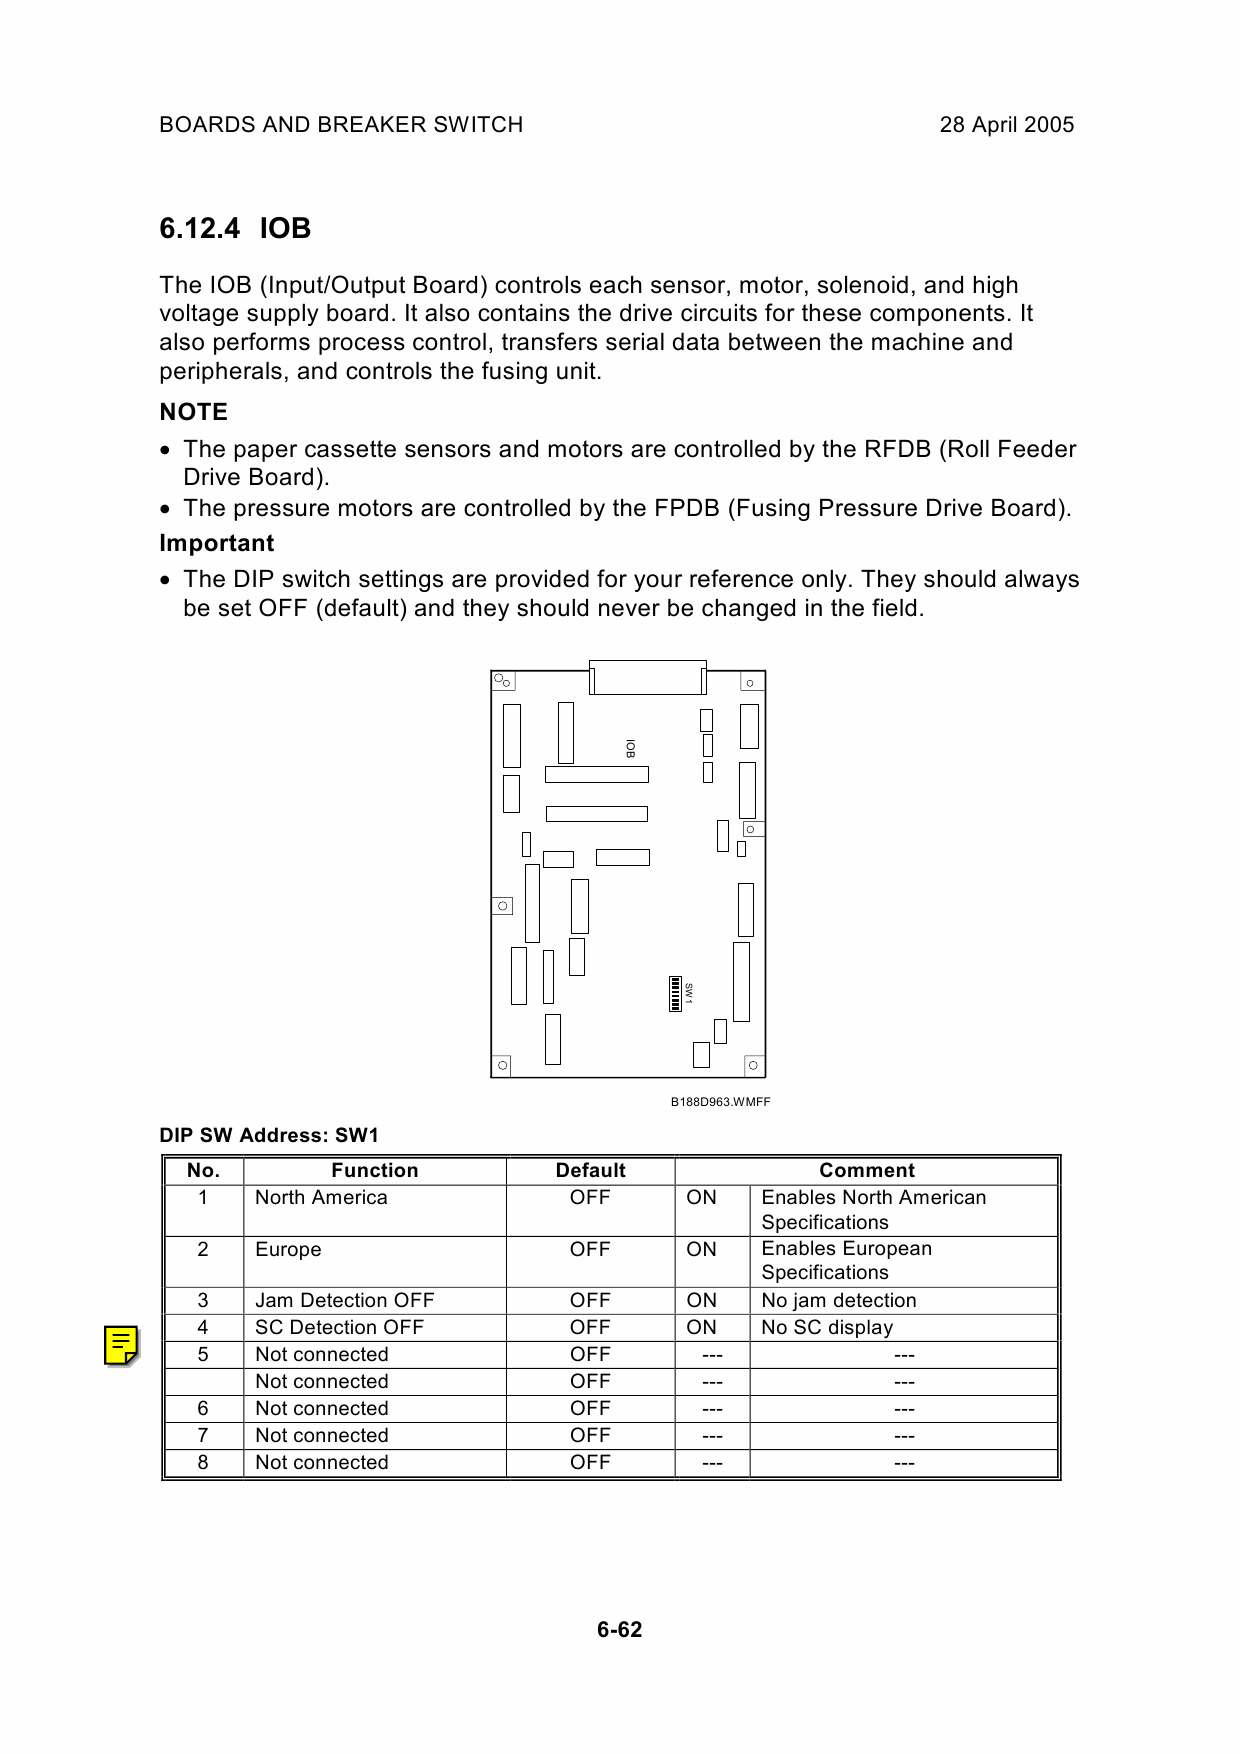 RICOH Aficio 480W B188 Service Manual-6